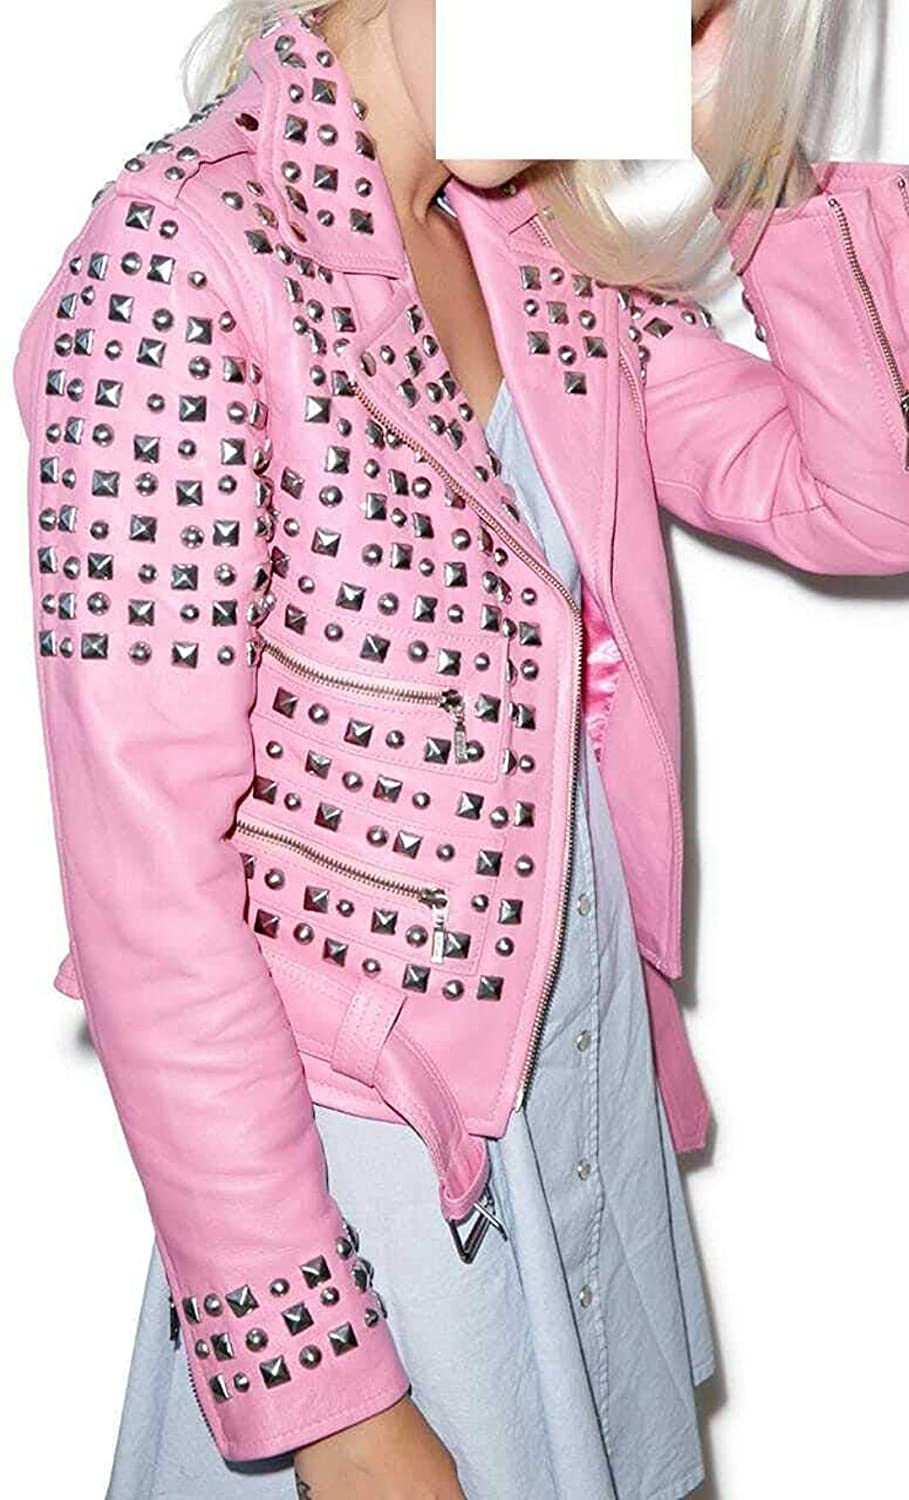 Women's Pink Spikes Leather Jacket Brando Studded Punk Rock Motorcycle Ladies Jacket